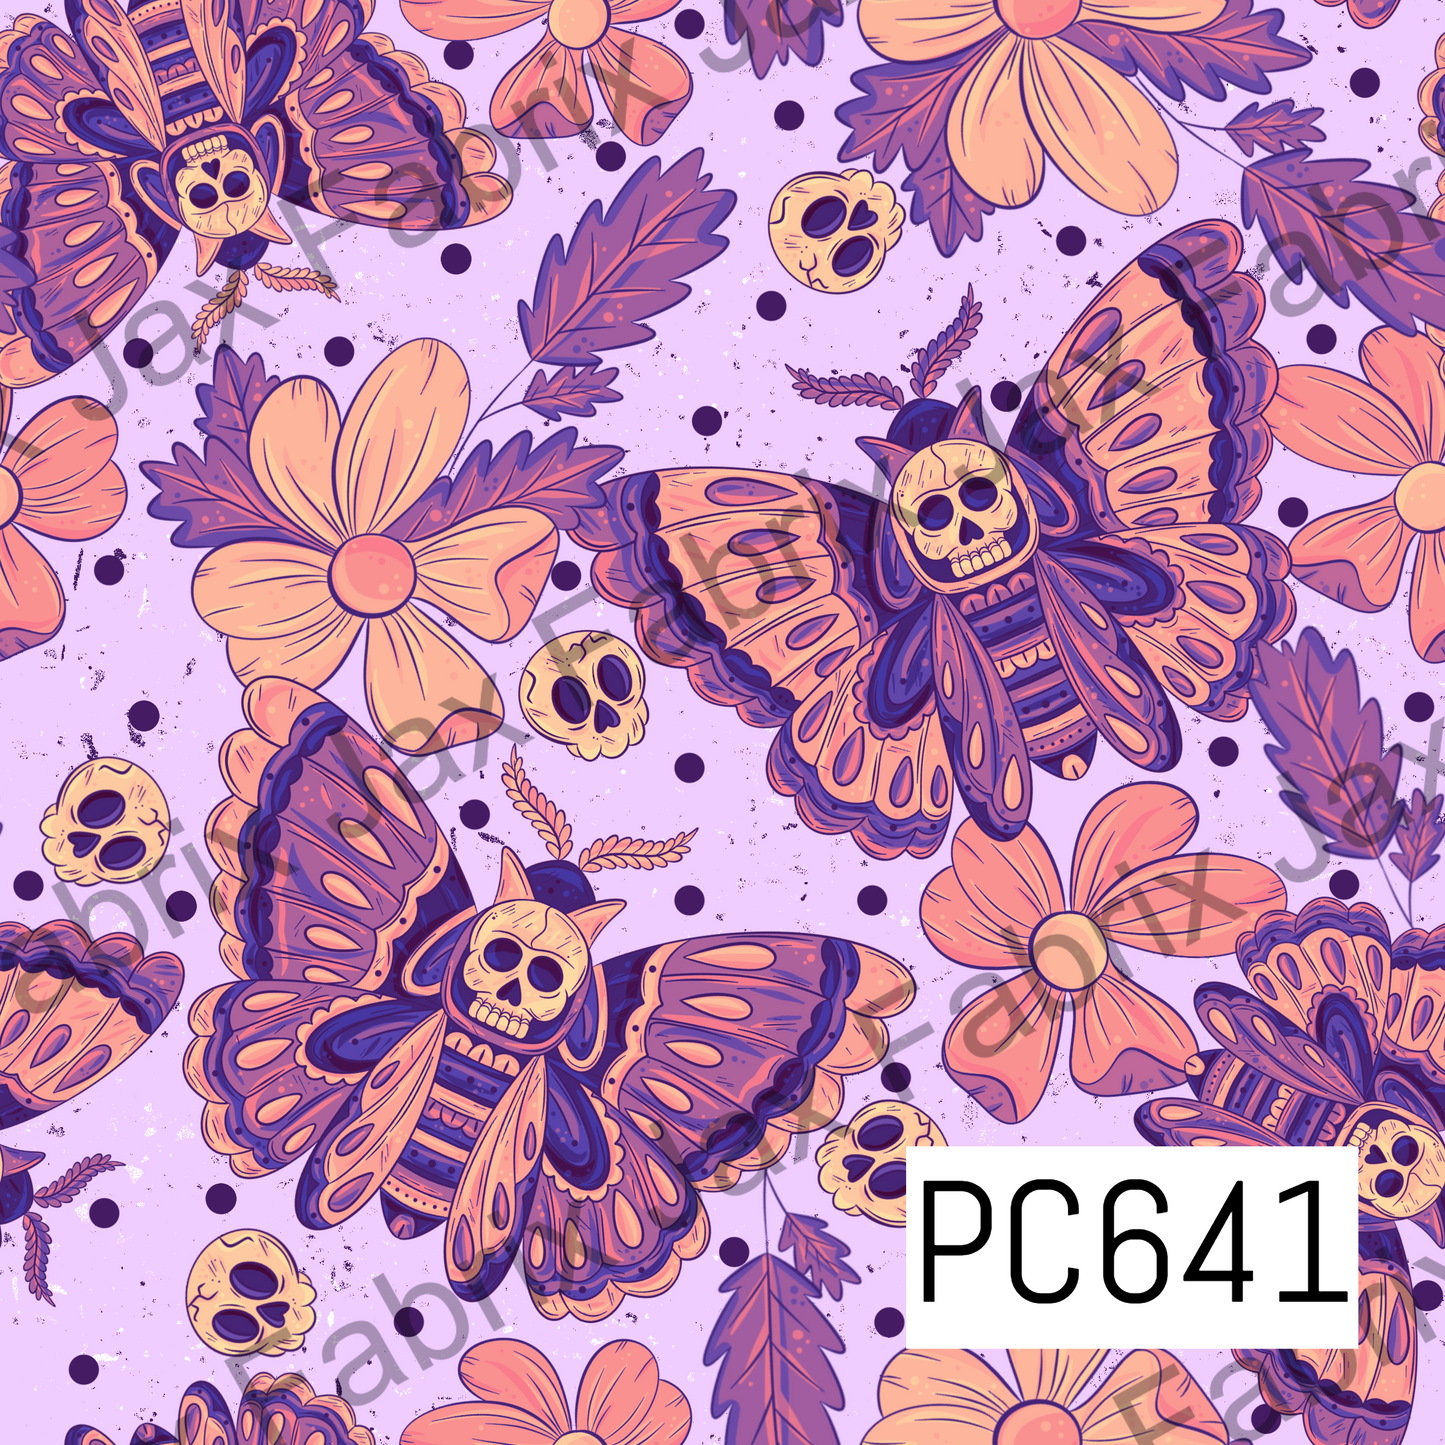 Death Moths Purple PC641